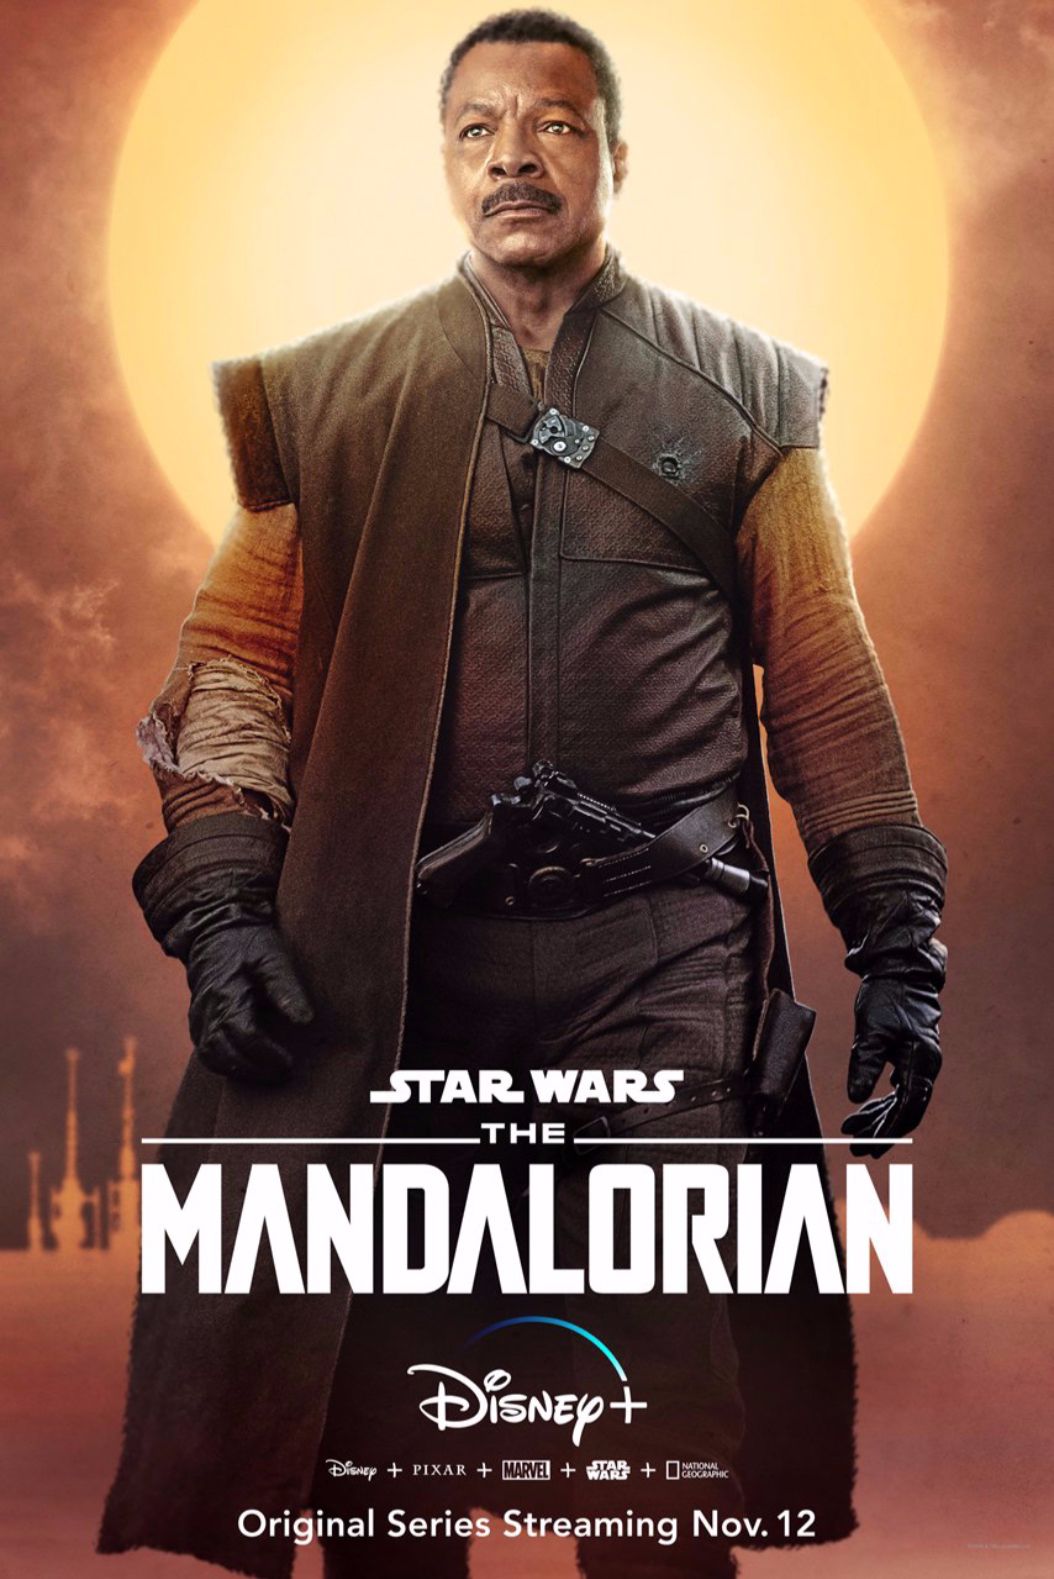 The Mandalorian Character Poster #2